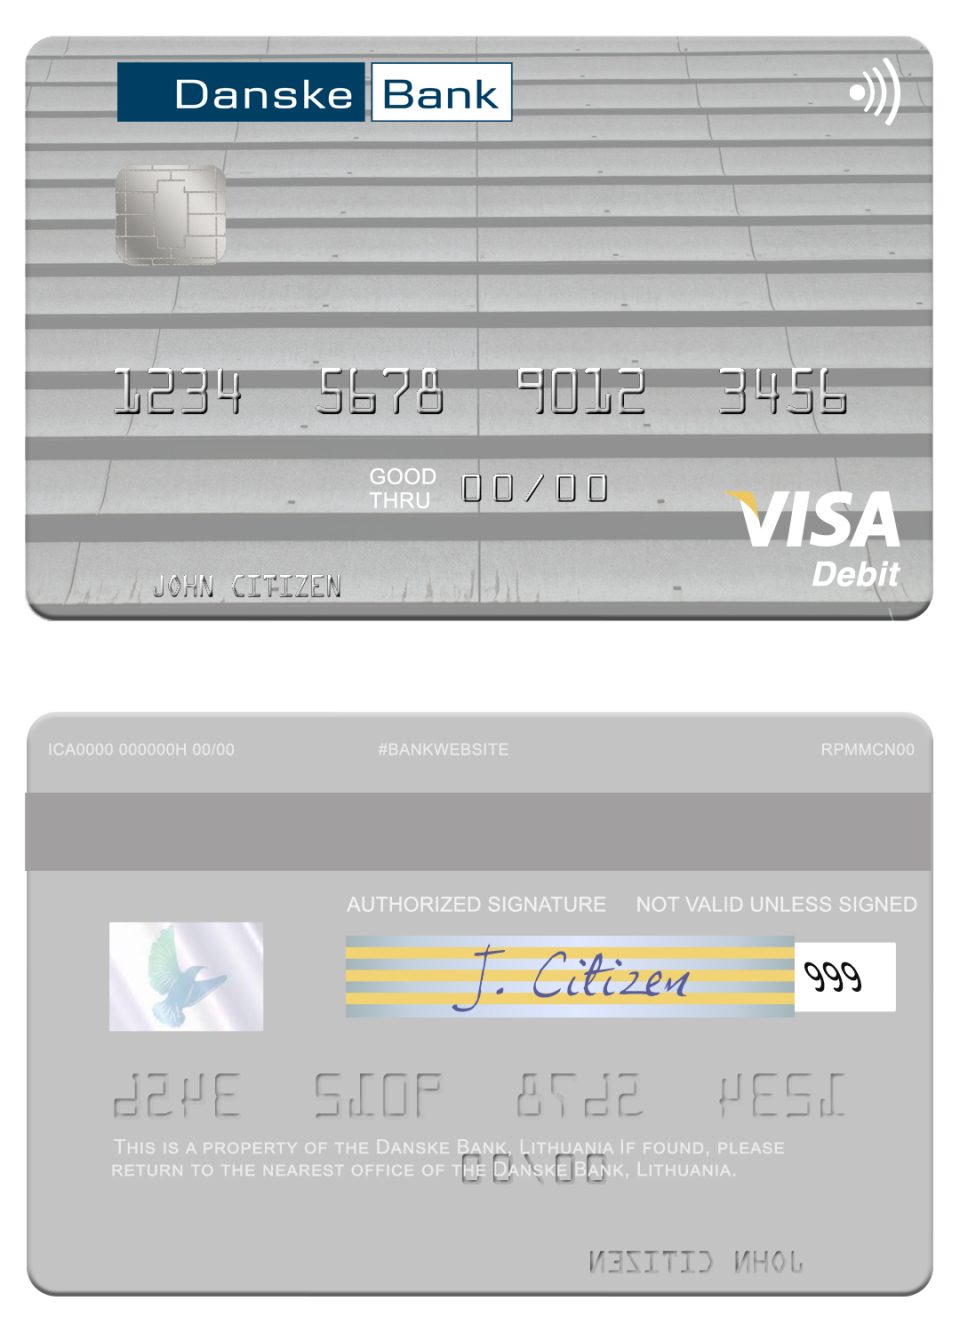 Fillable Lithuania Danske Bank visa card Templates | Layer-Based PSD